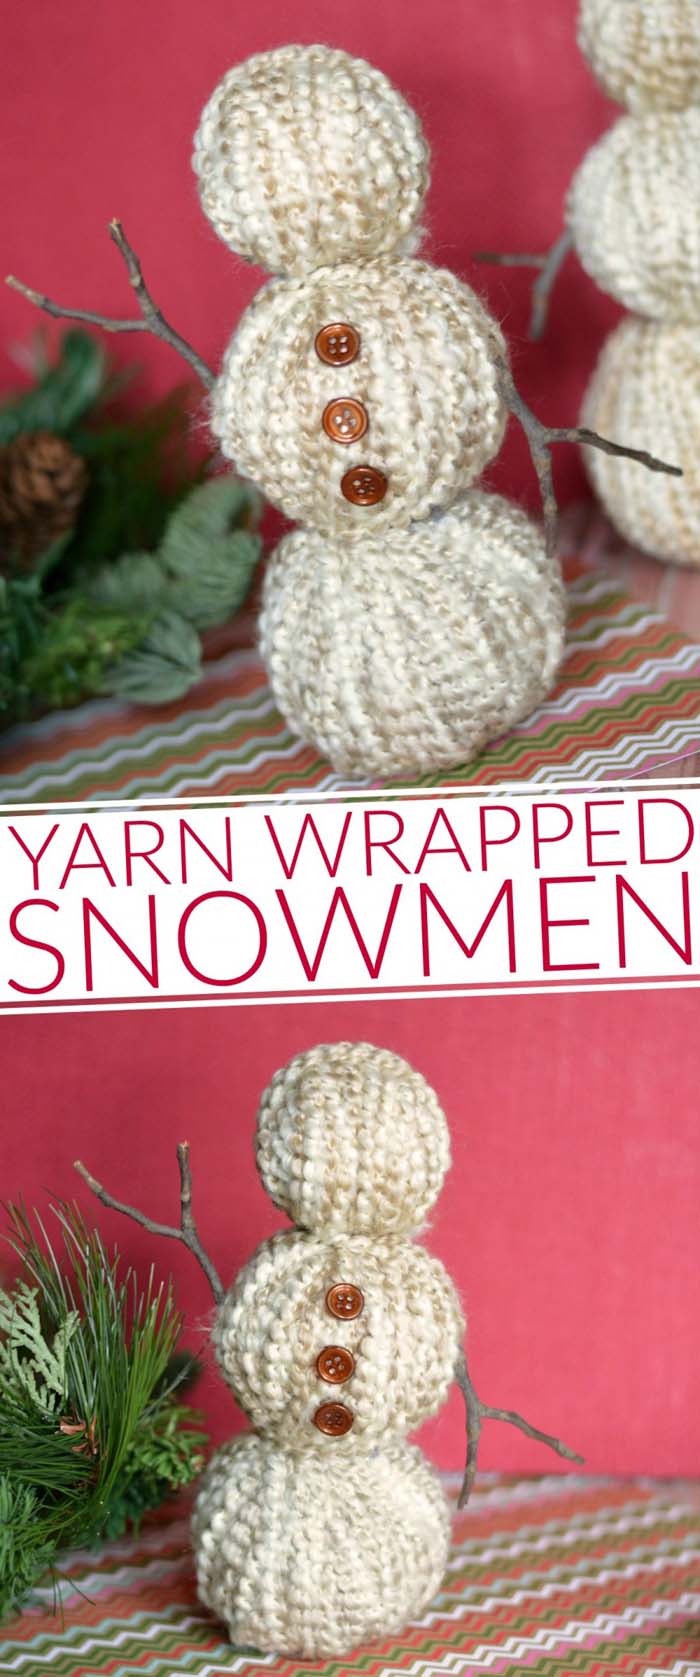 Yarn Wrapped Snowmen #Christmas #snowman #crafts #decorhomeideas